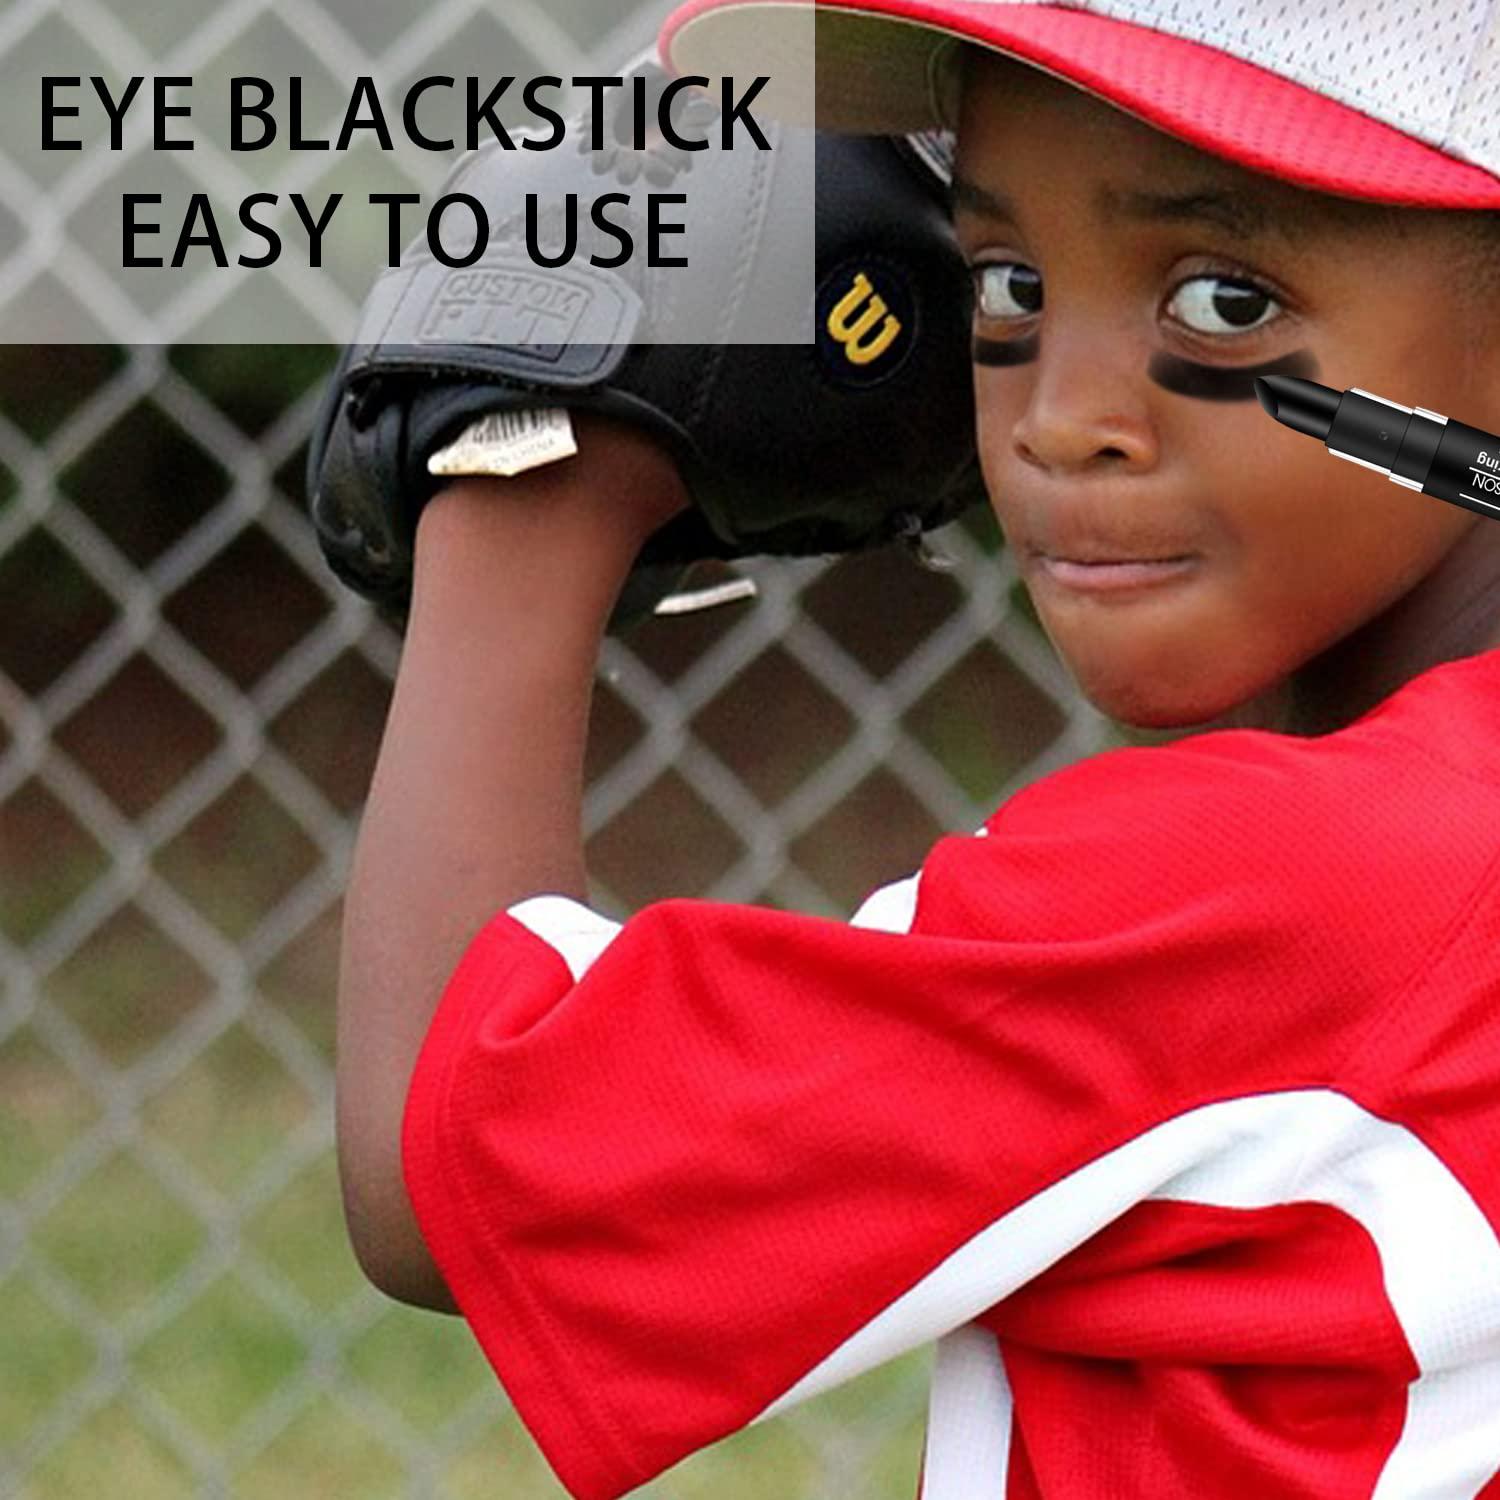 7 Eyeblack ideas  eyeblack, eye black softball, eye black designs